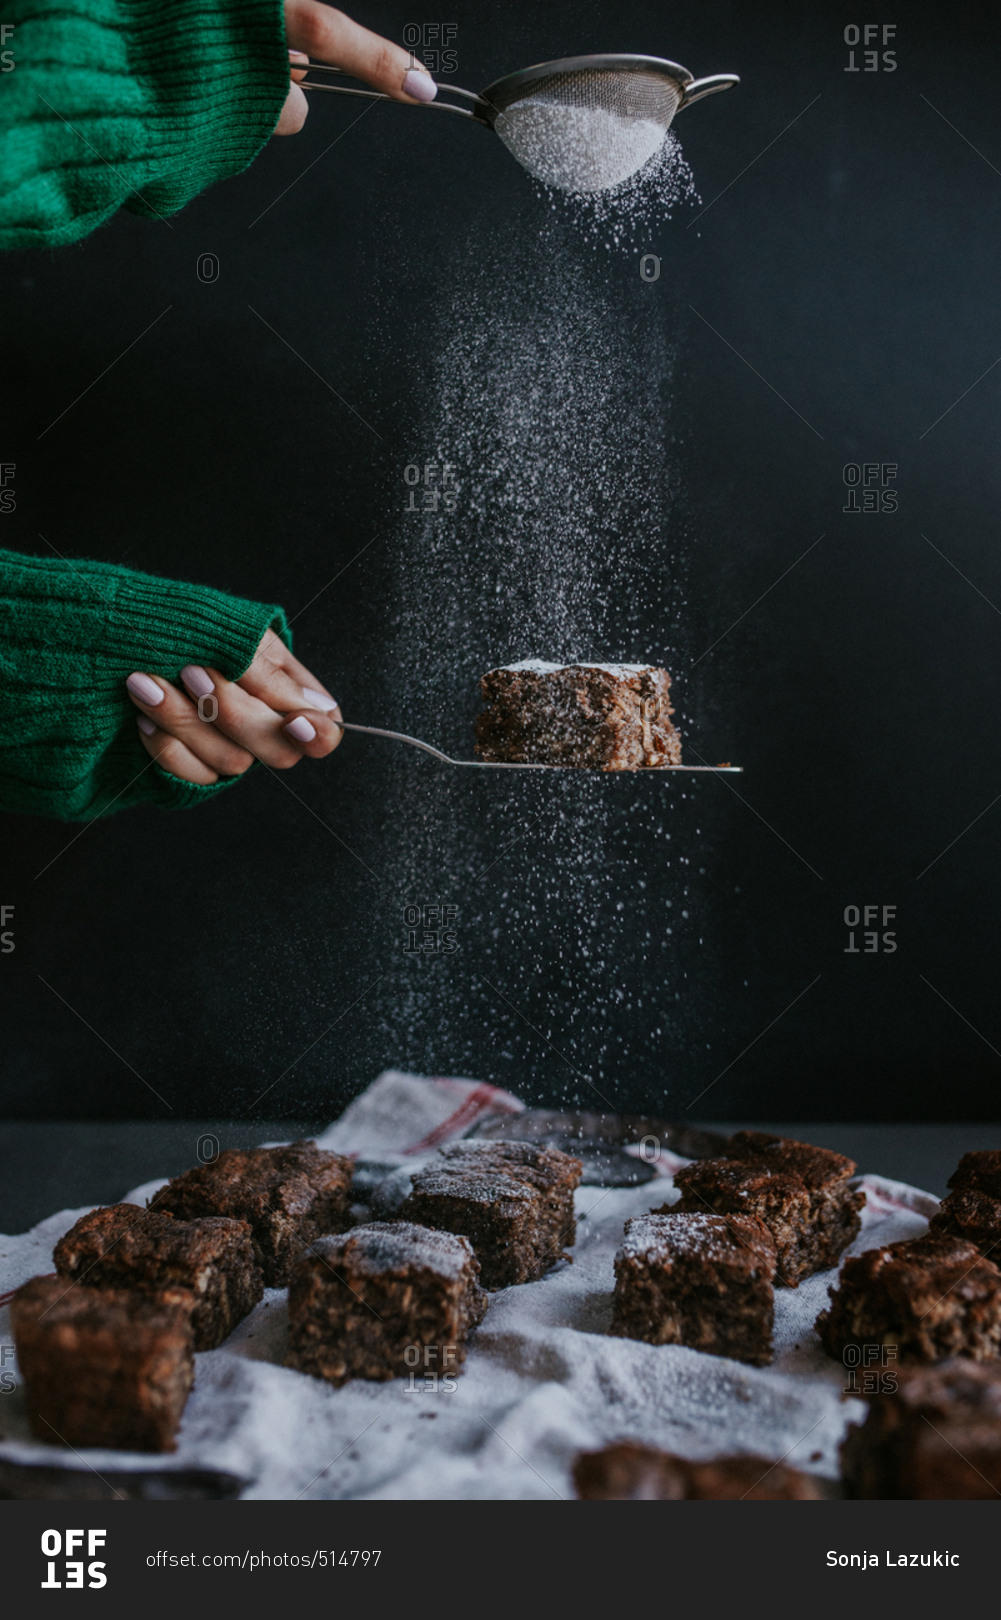 Person sifting powdered sugar on homemade vegan brownies